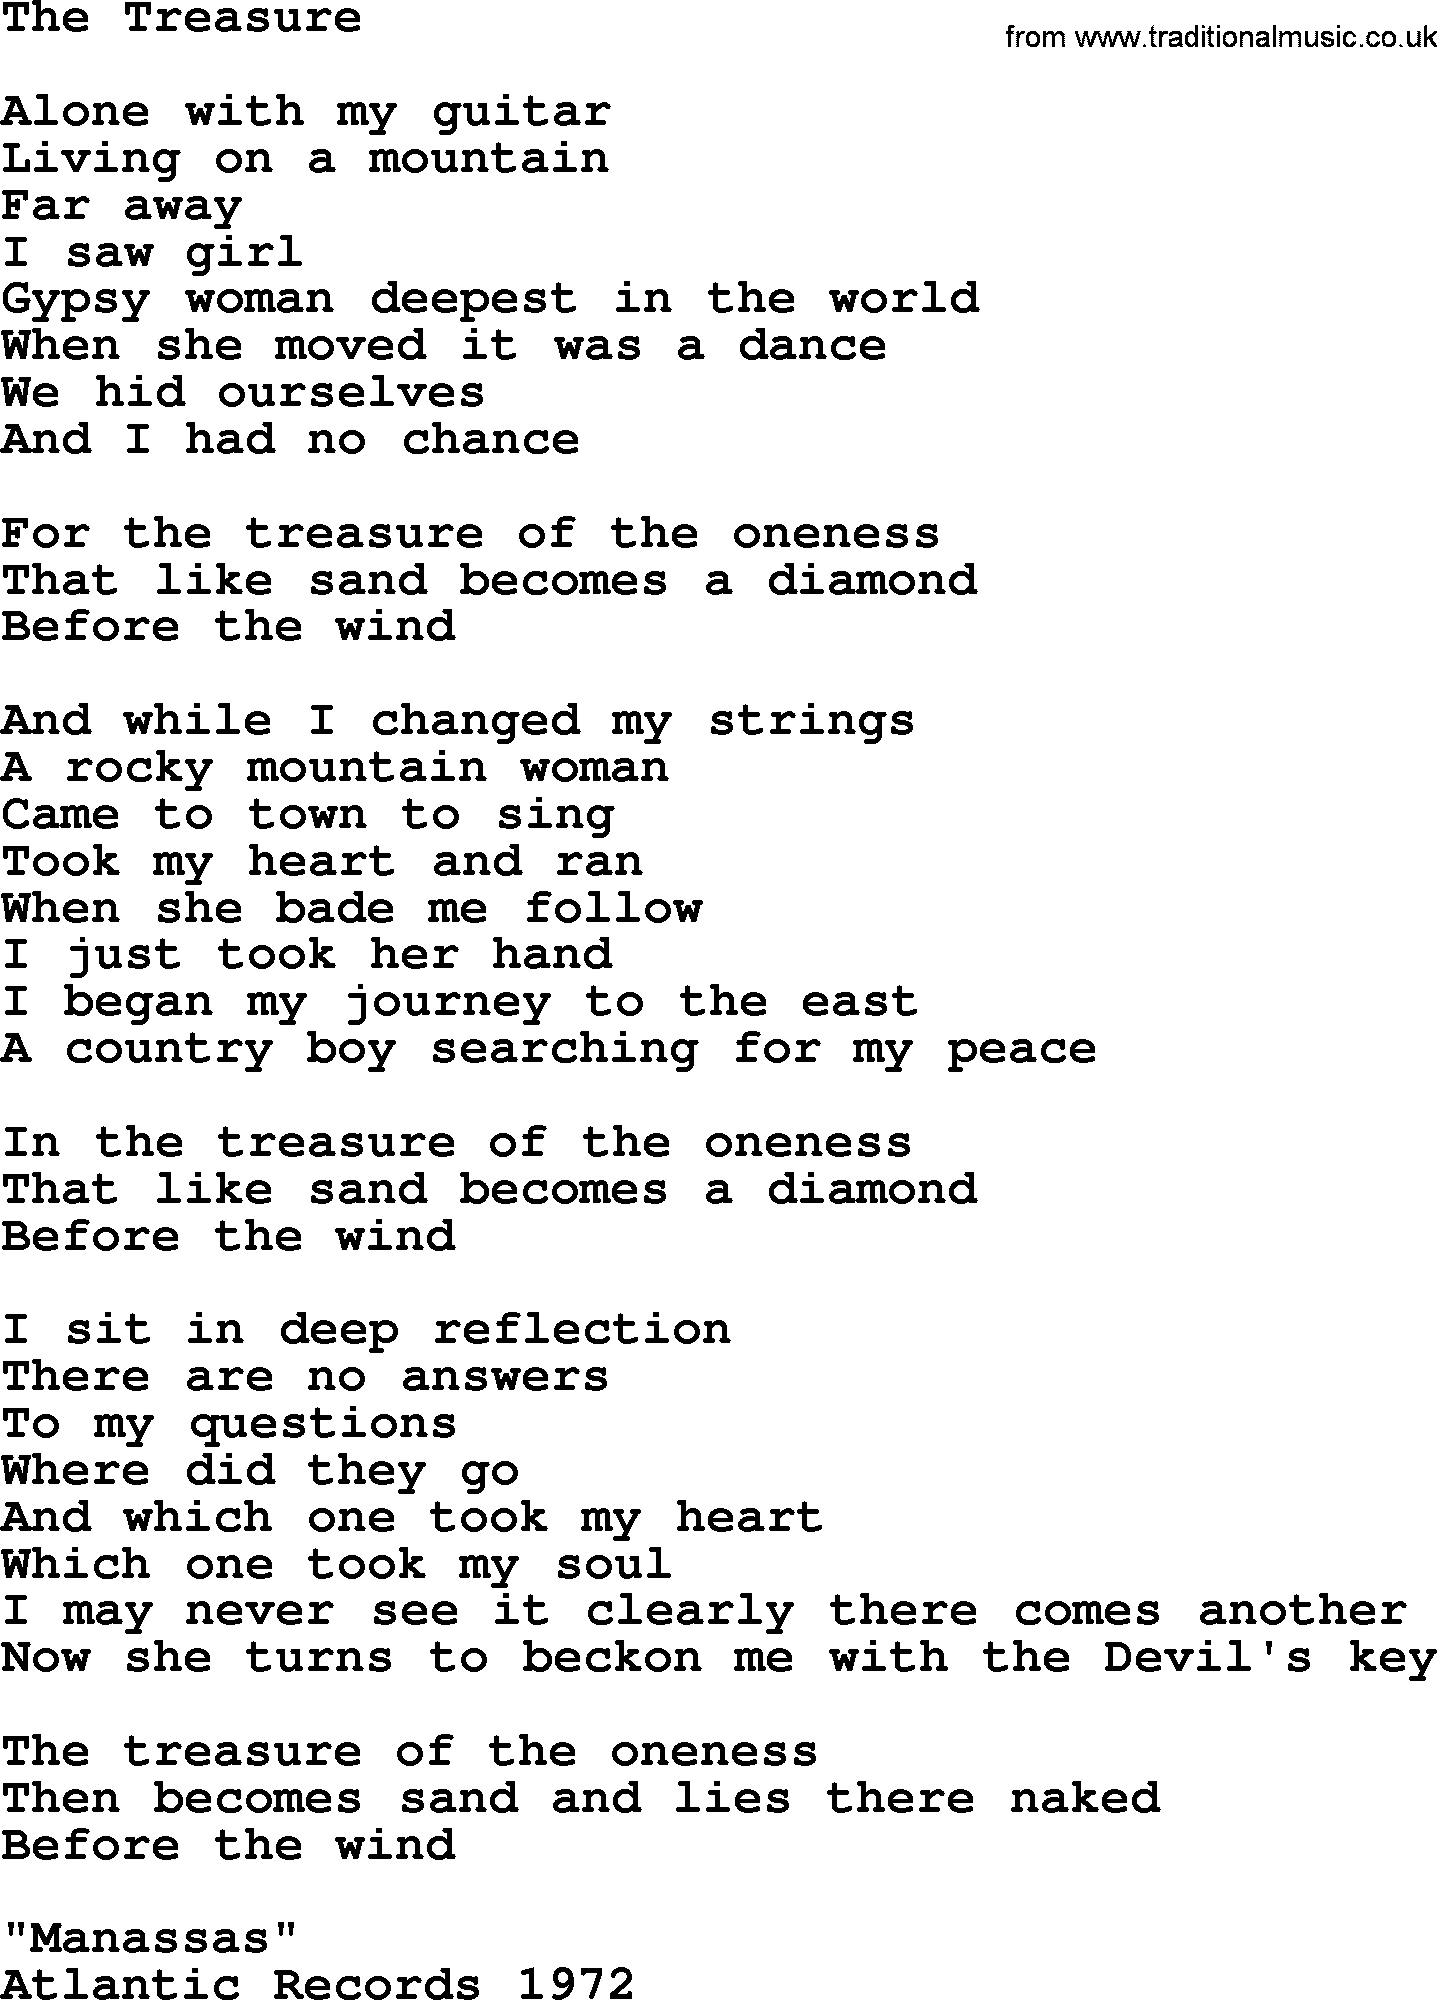 The Byrds song The Treasure, lyrics